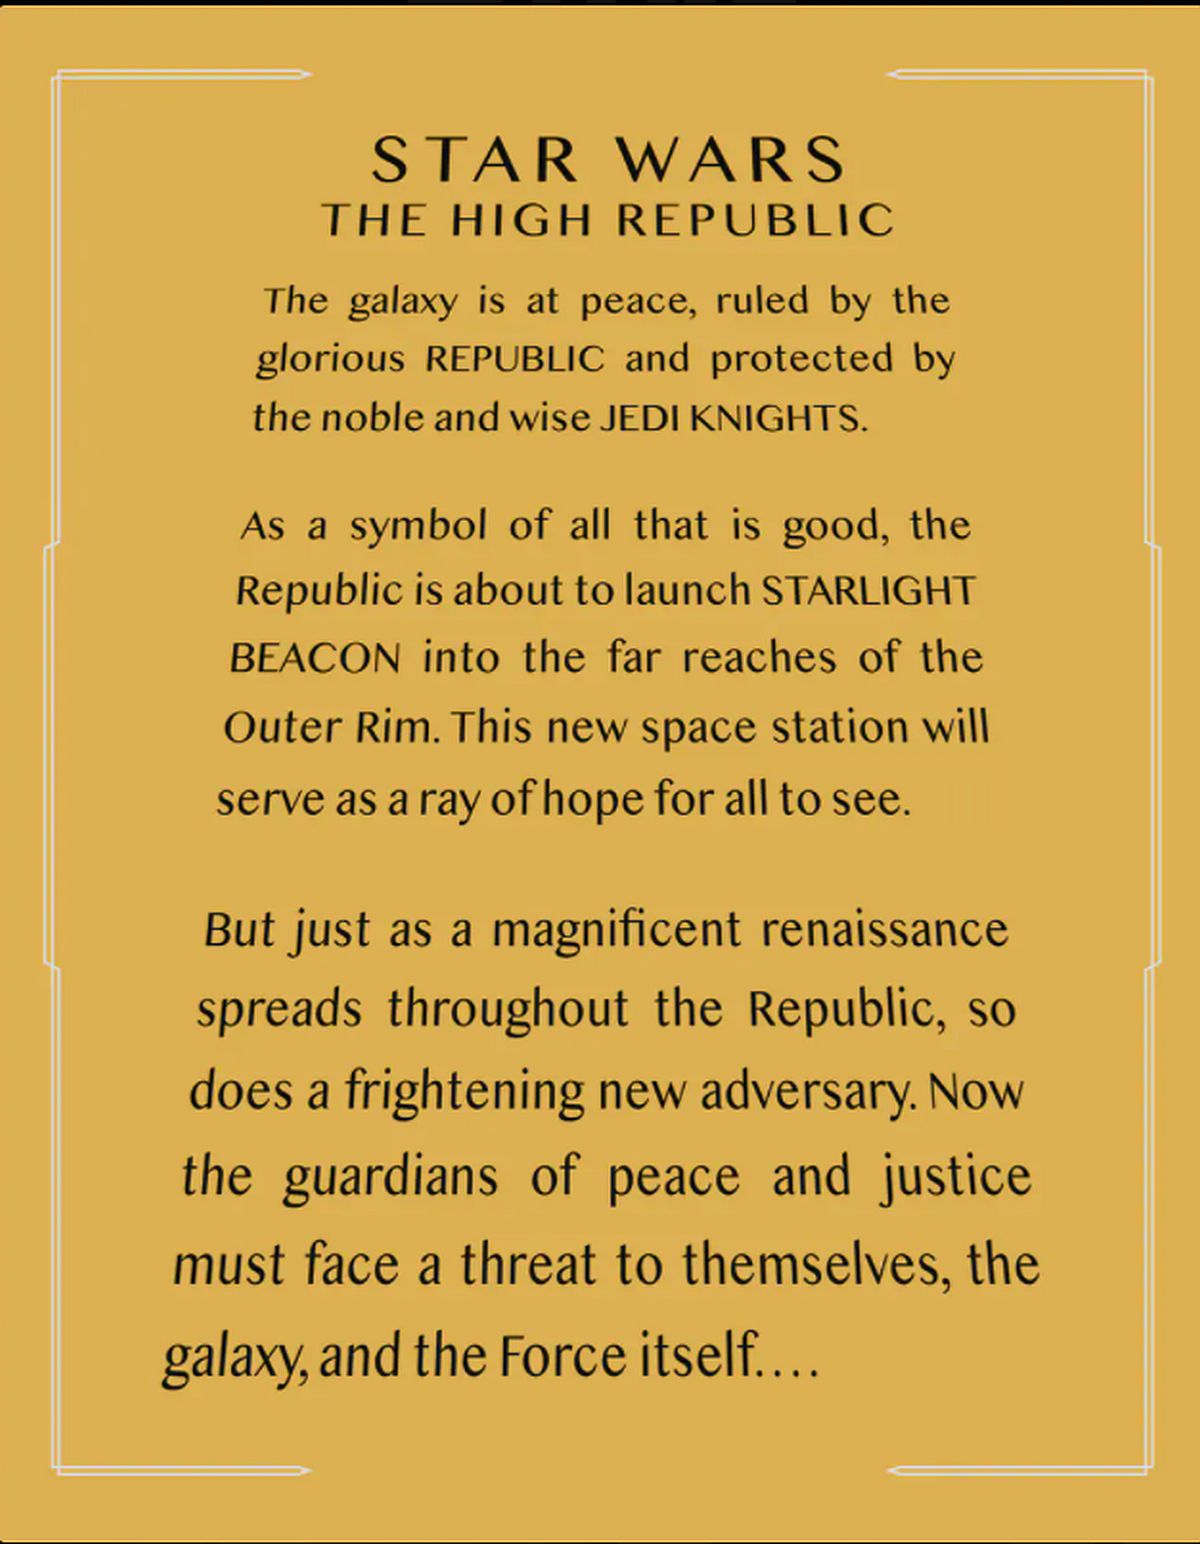 The High Republic crawl